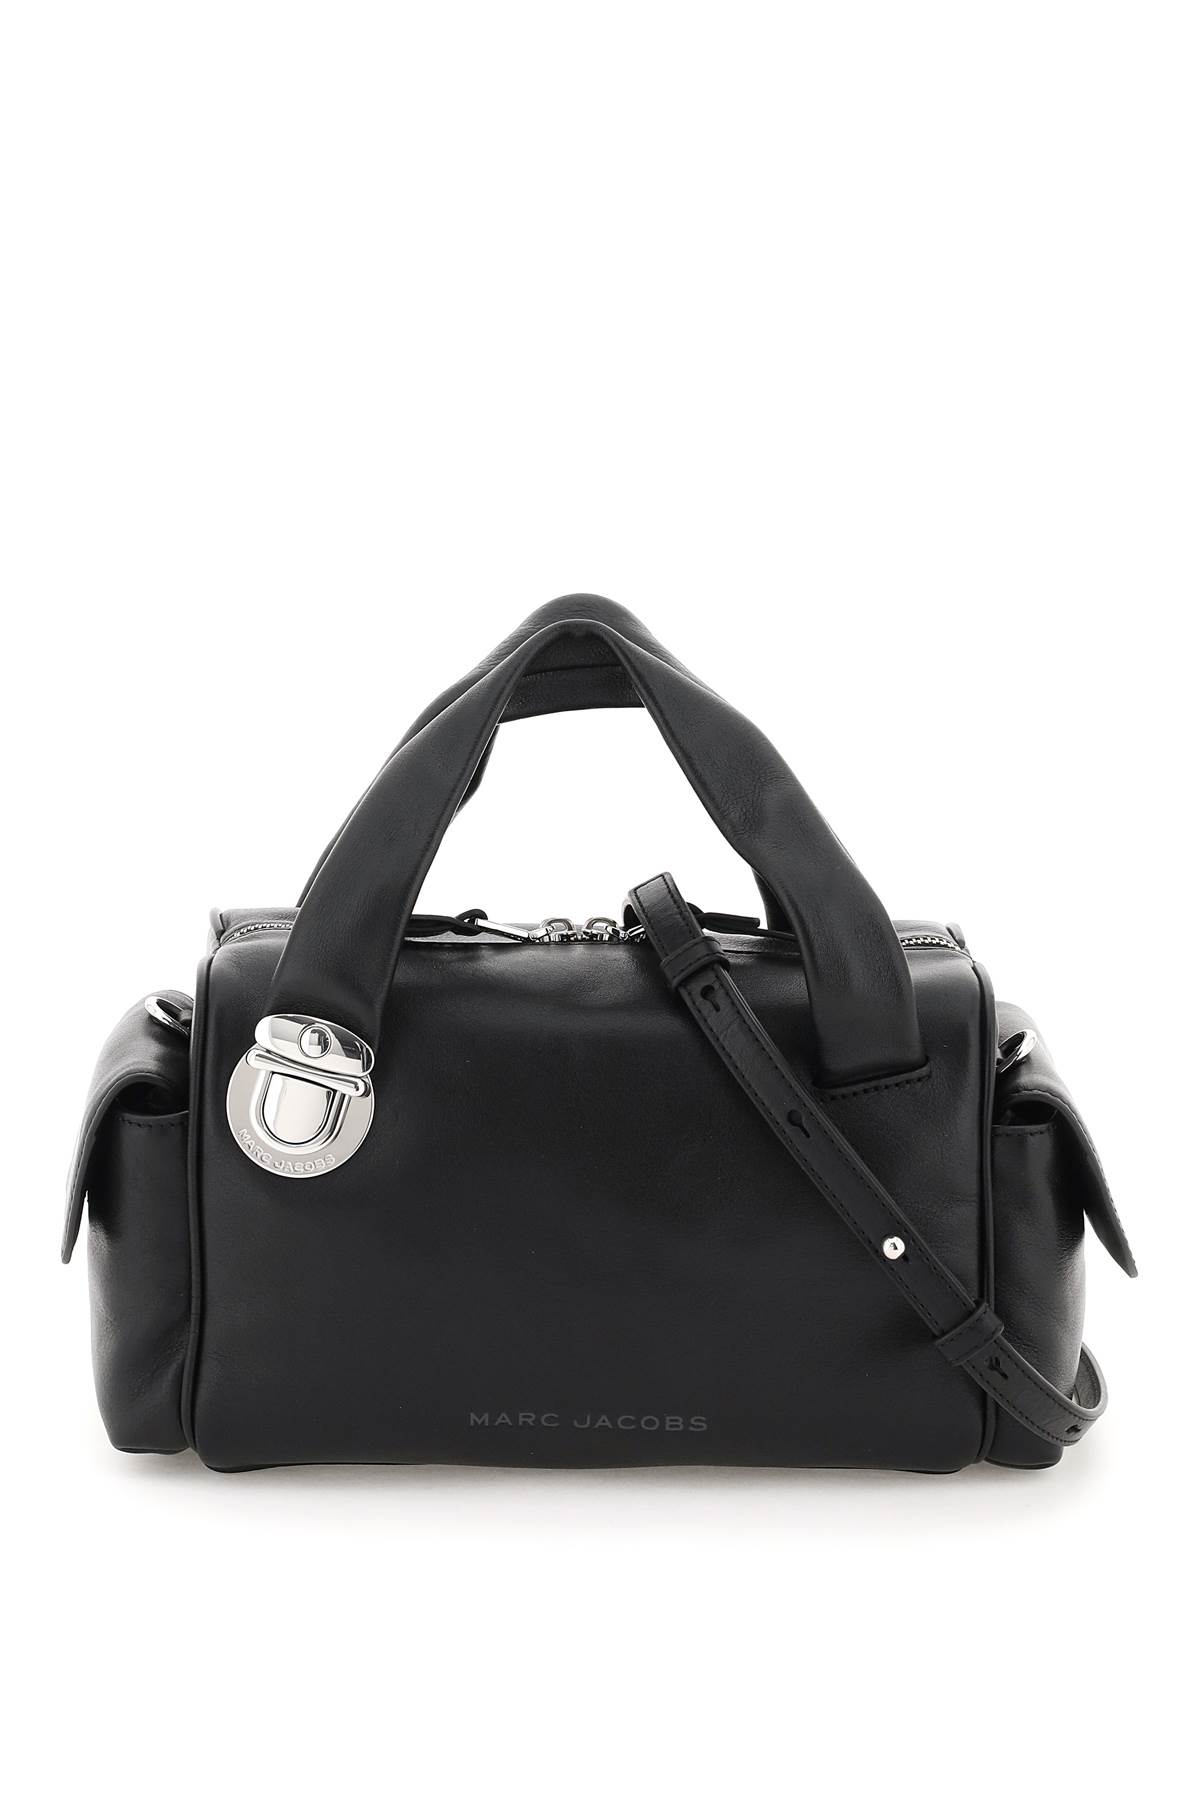 Marc Jacobs the Pushlock Satchel Leather Bag